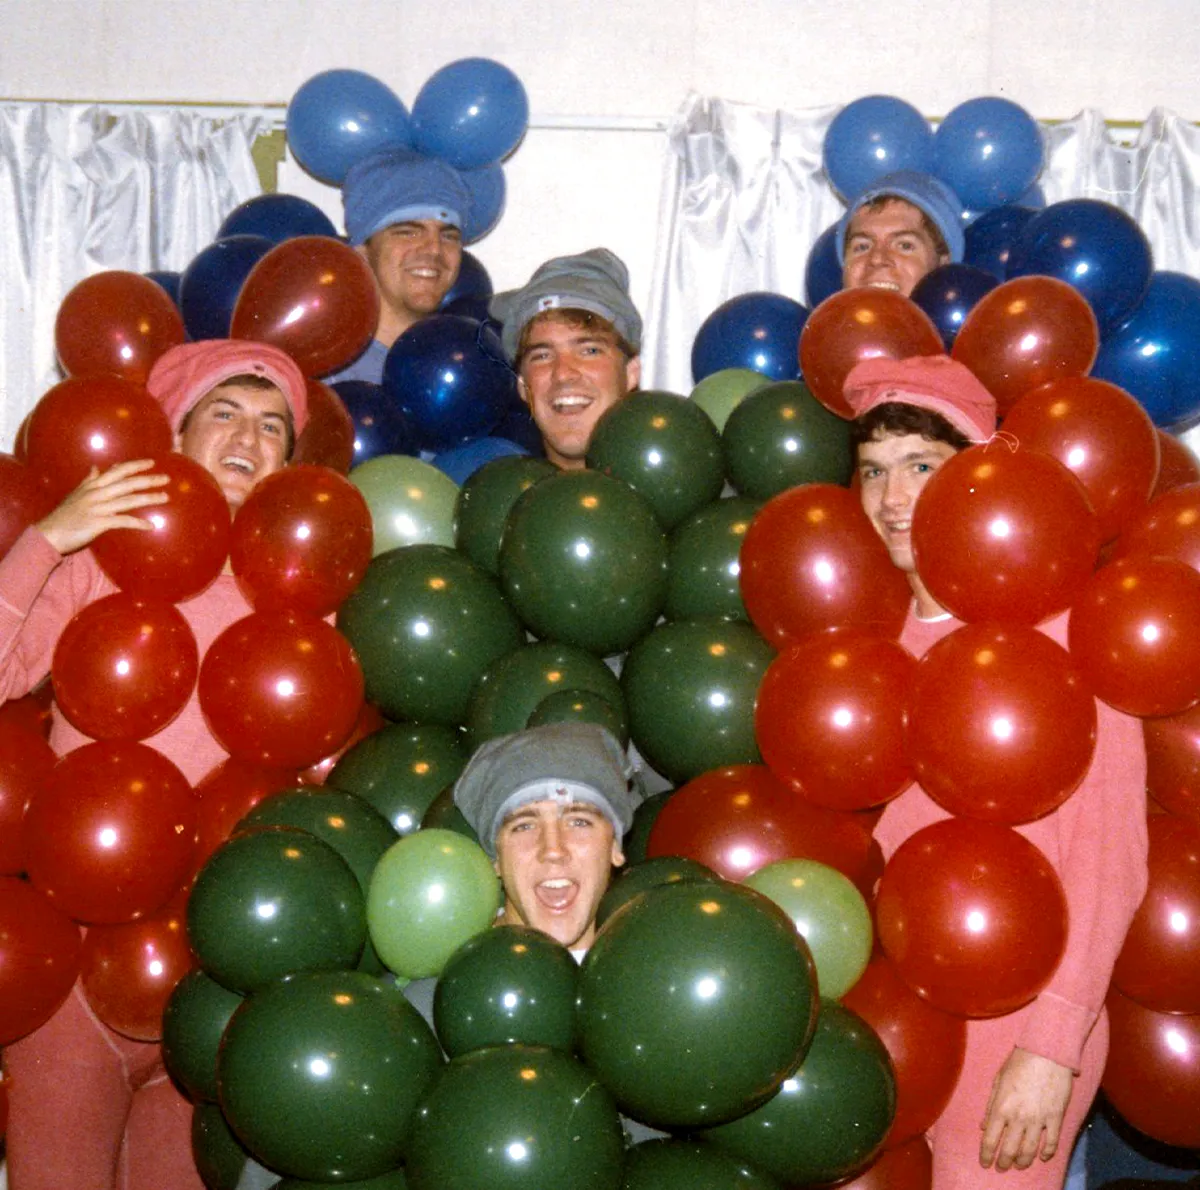 Chris Baker, Michael Gamboli, Reid Leslie, Trupe Ortlieb, Scott Yeager, and John Westrum posing while wearing homemade grapes costumes